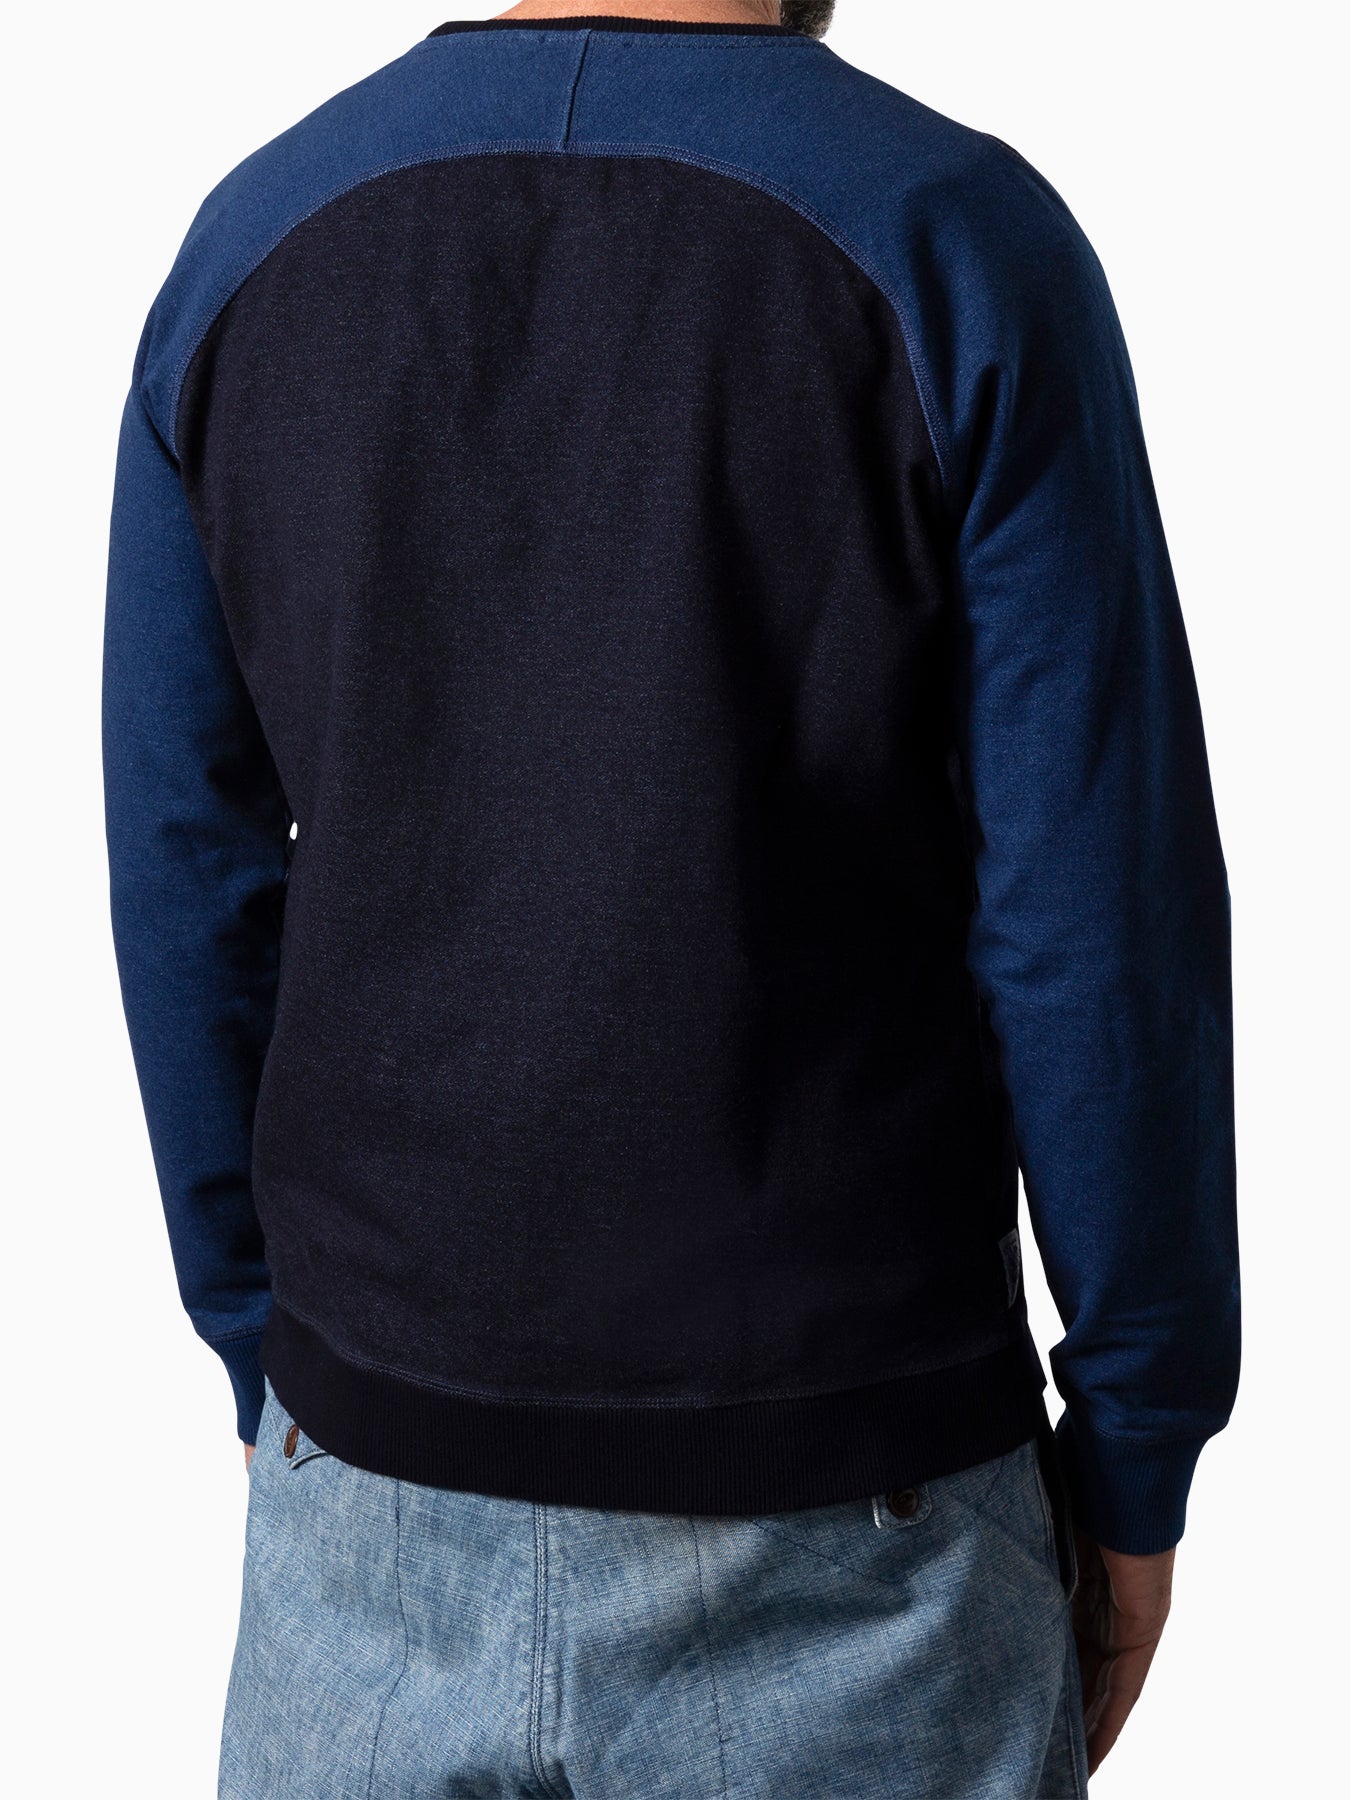 Limited Sweater Two Tone Indigo Dyed